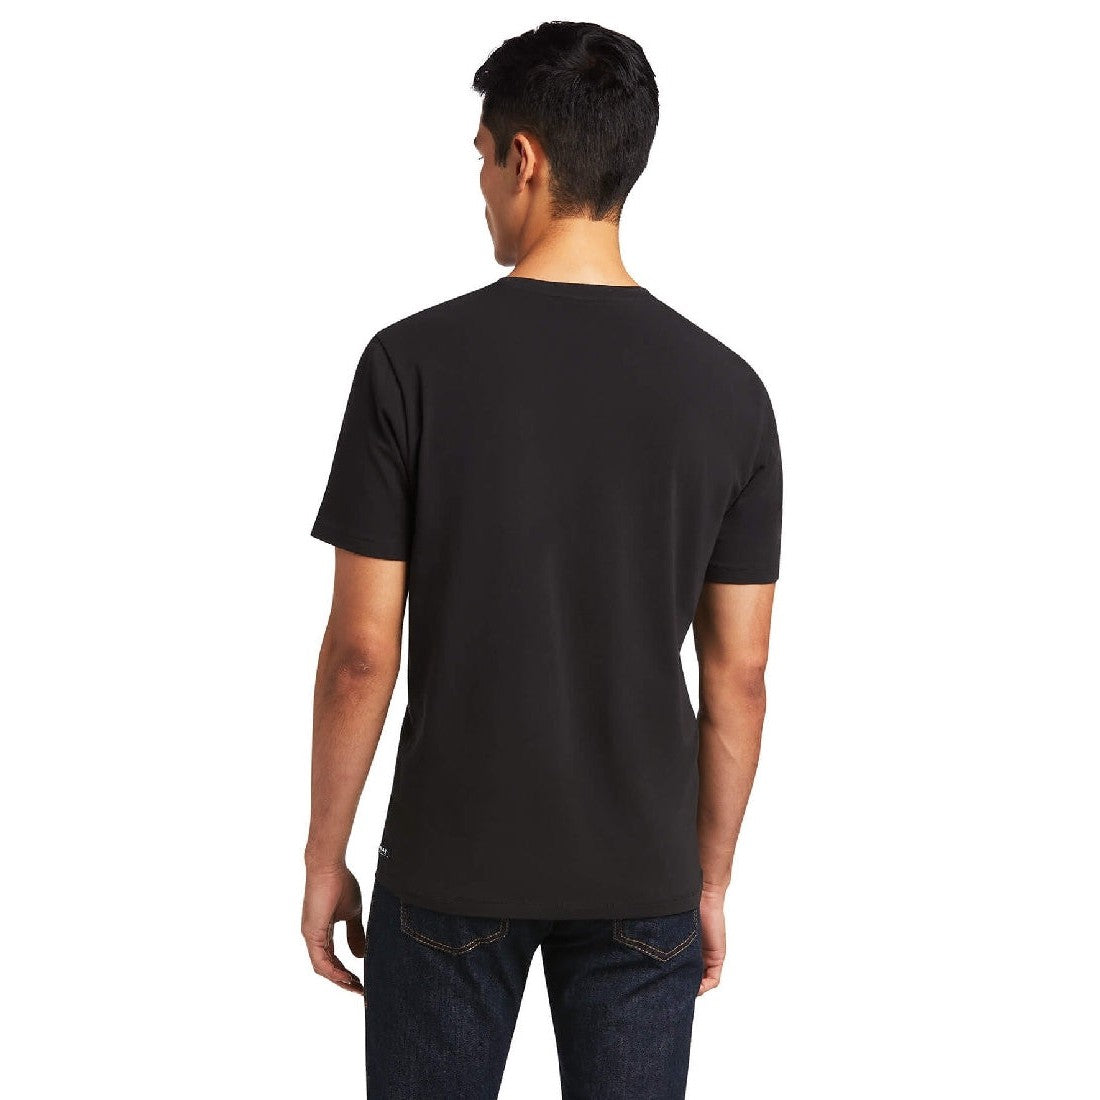 Tee Shirt Ariat Vertical Logo Black Sp22 Mens-Ascot Saddlery-The Equestrian